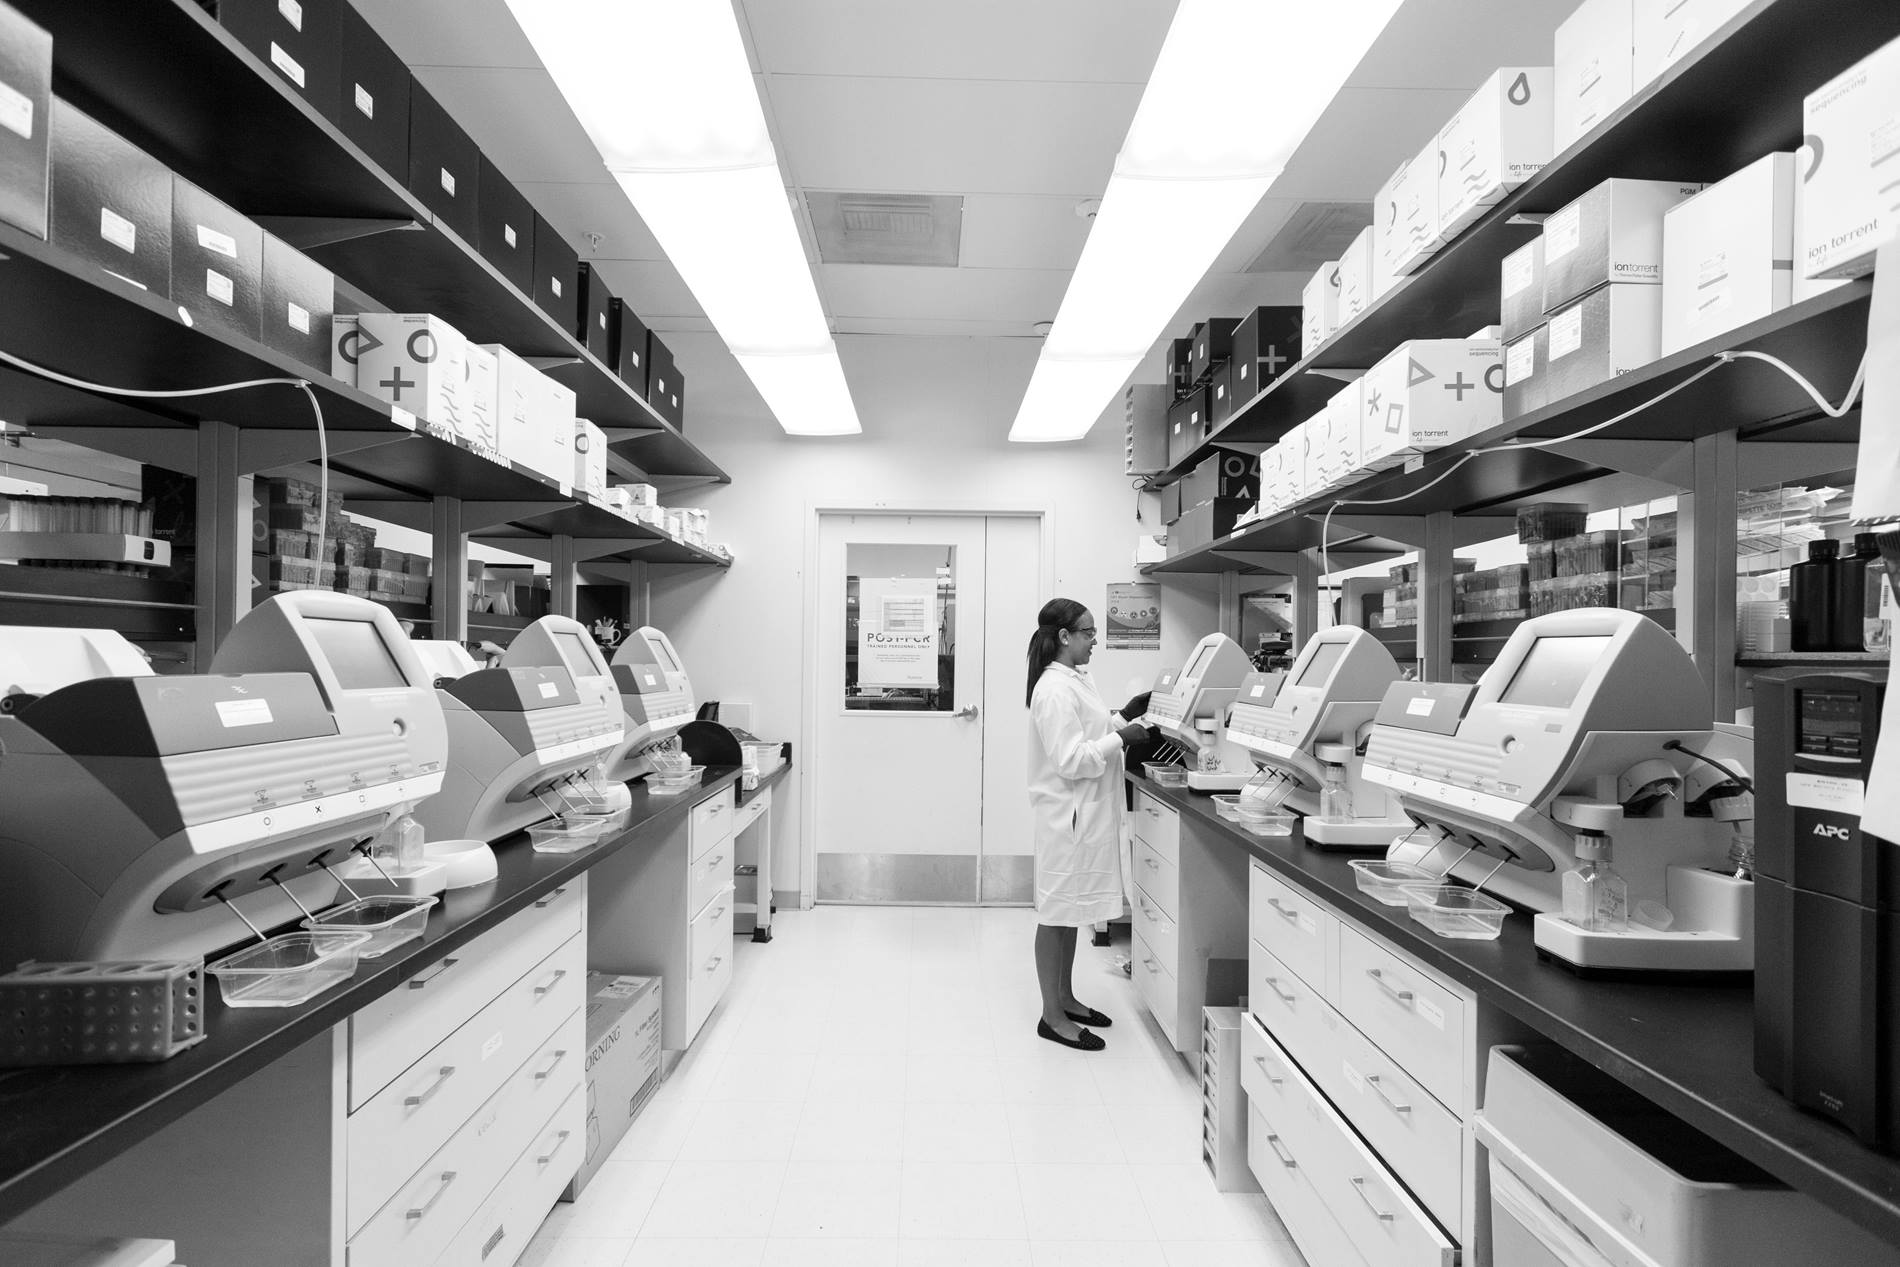 Staff in lab